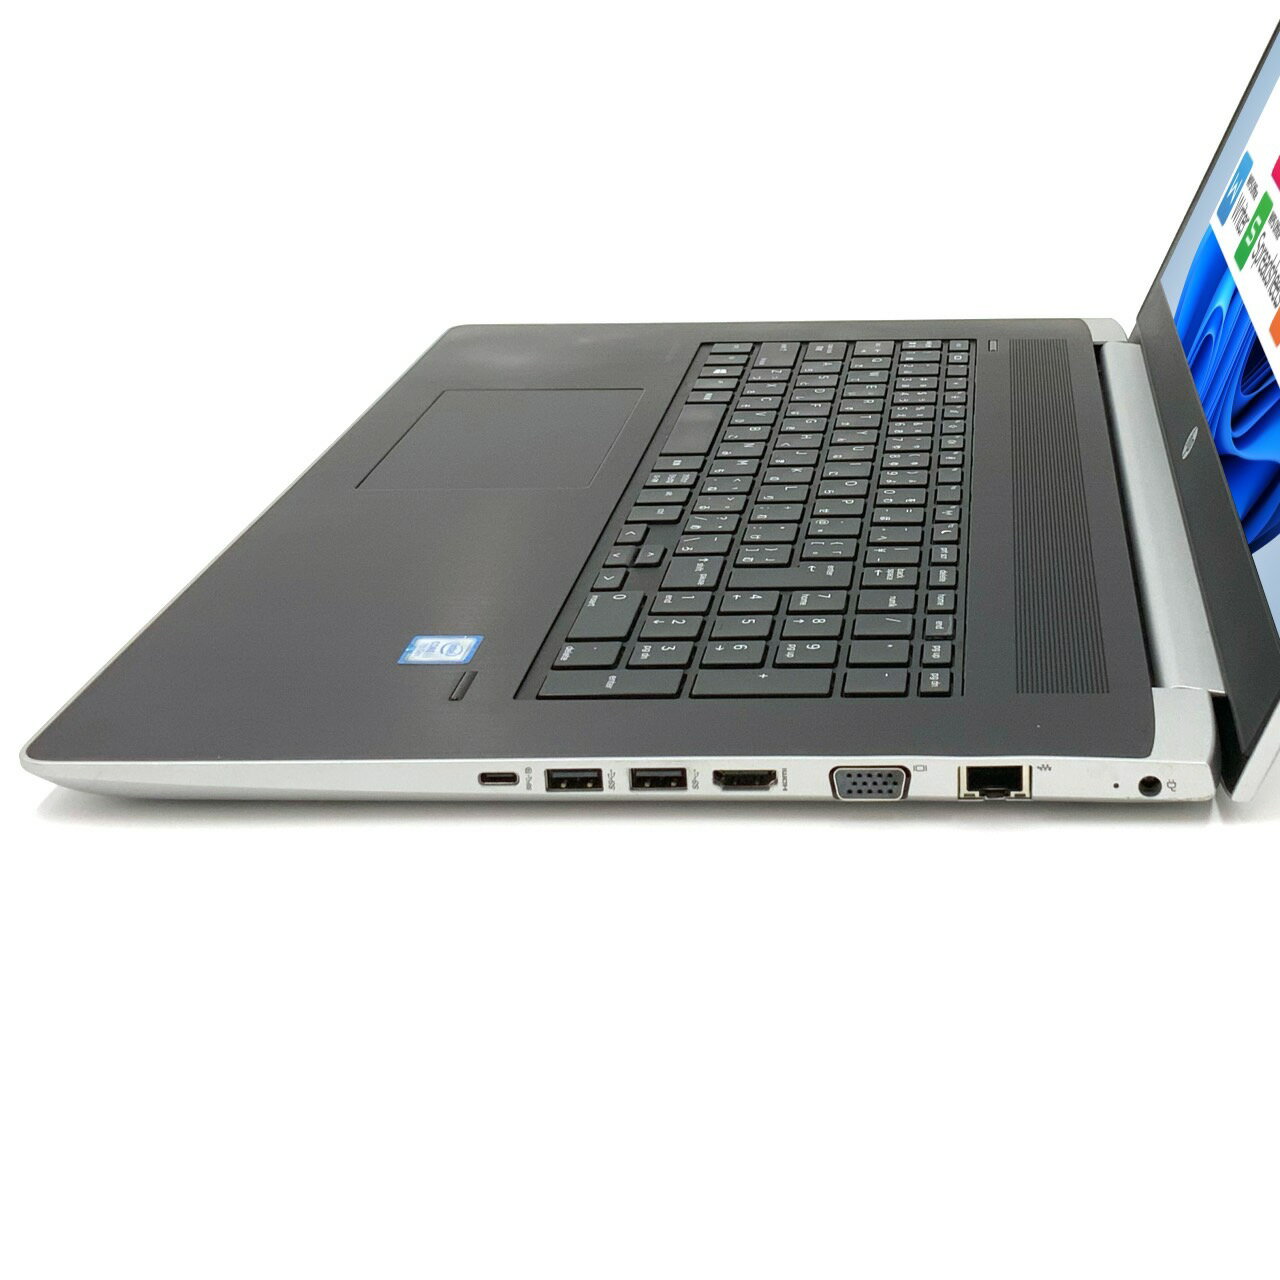 【スペック】 HP ProBook 470 G5 第8世代 Core i5 8250U 8GB 新品SSD960GB 64bit